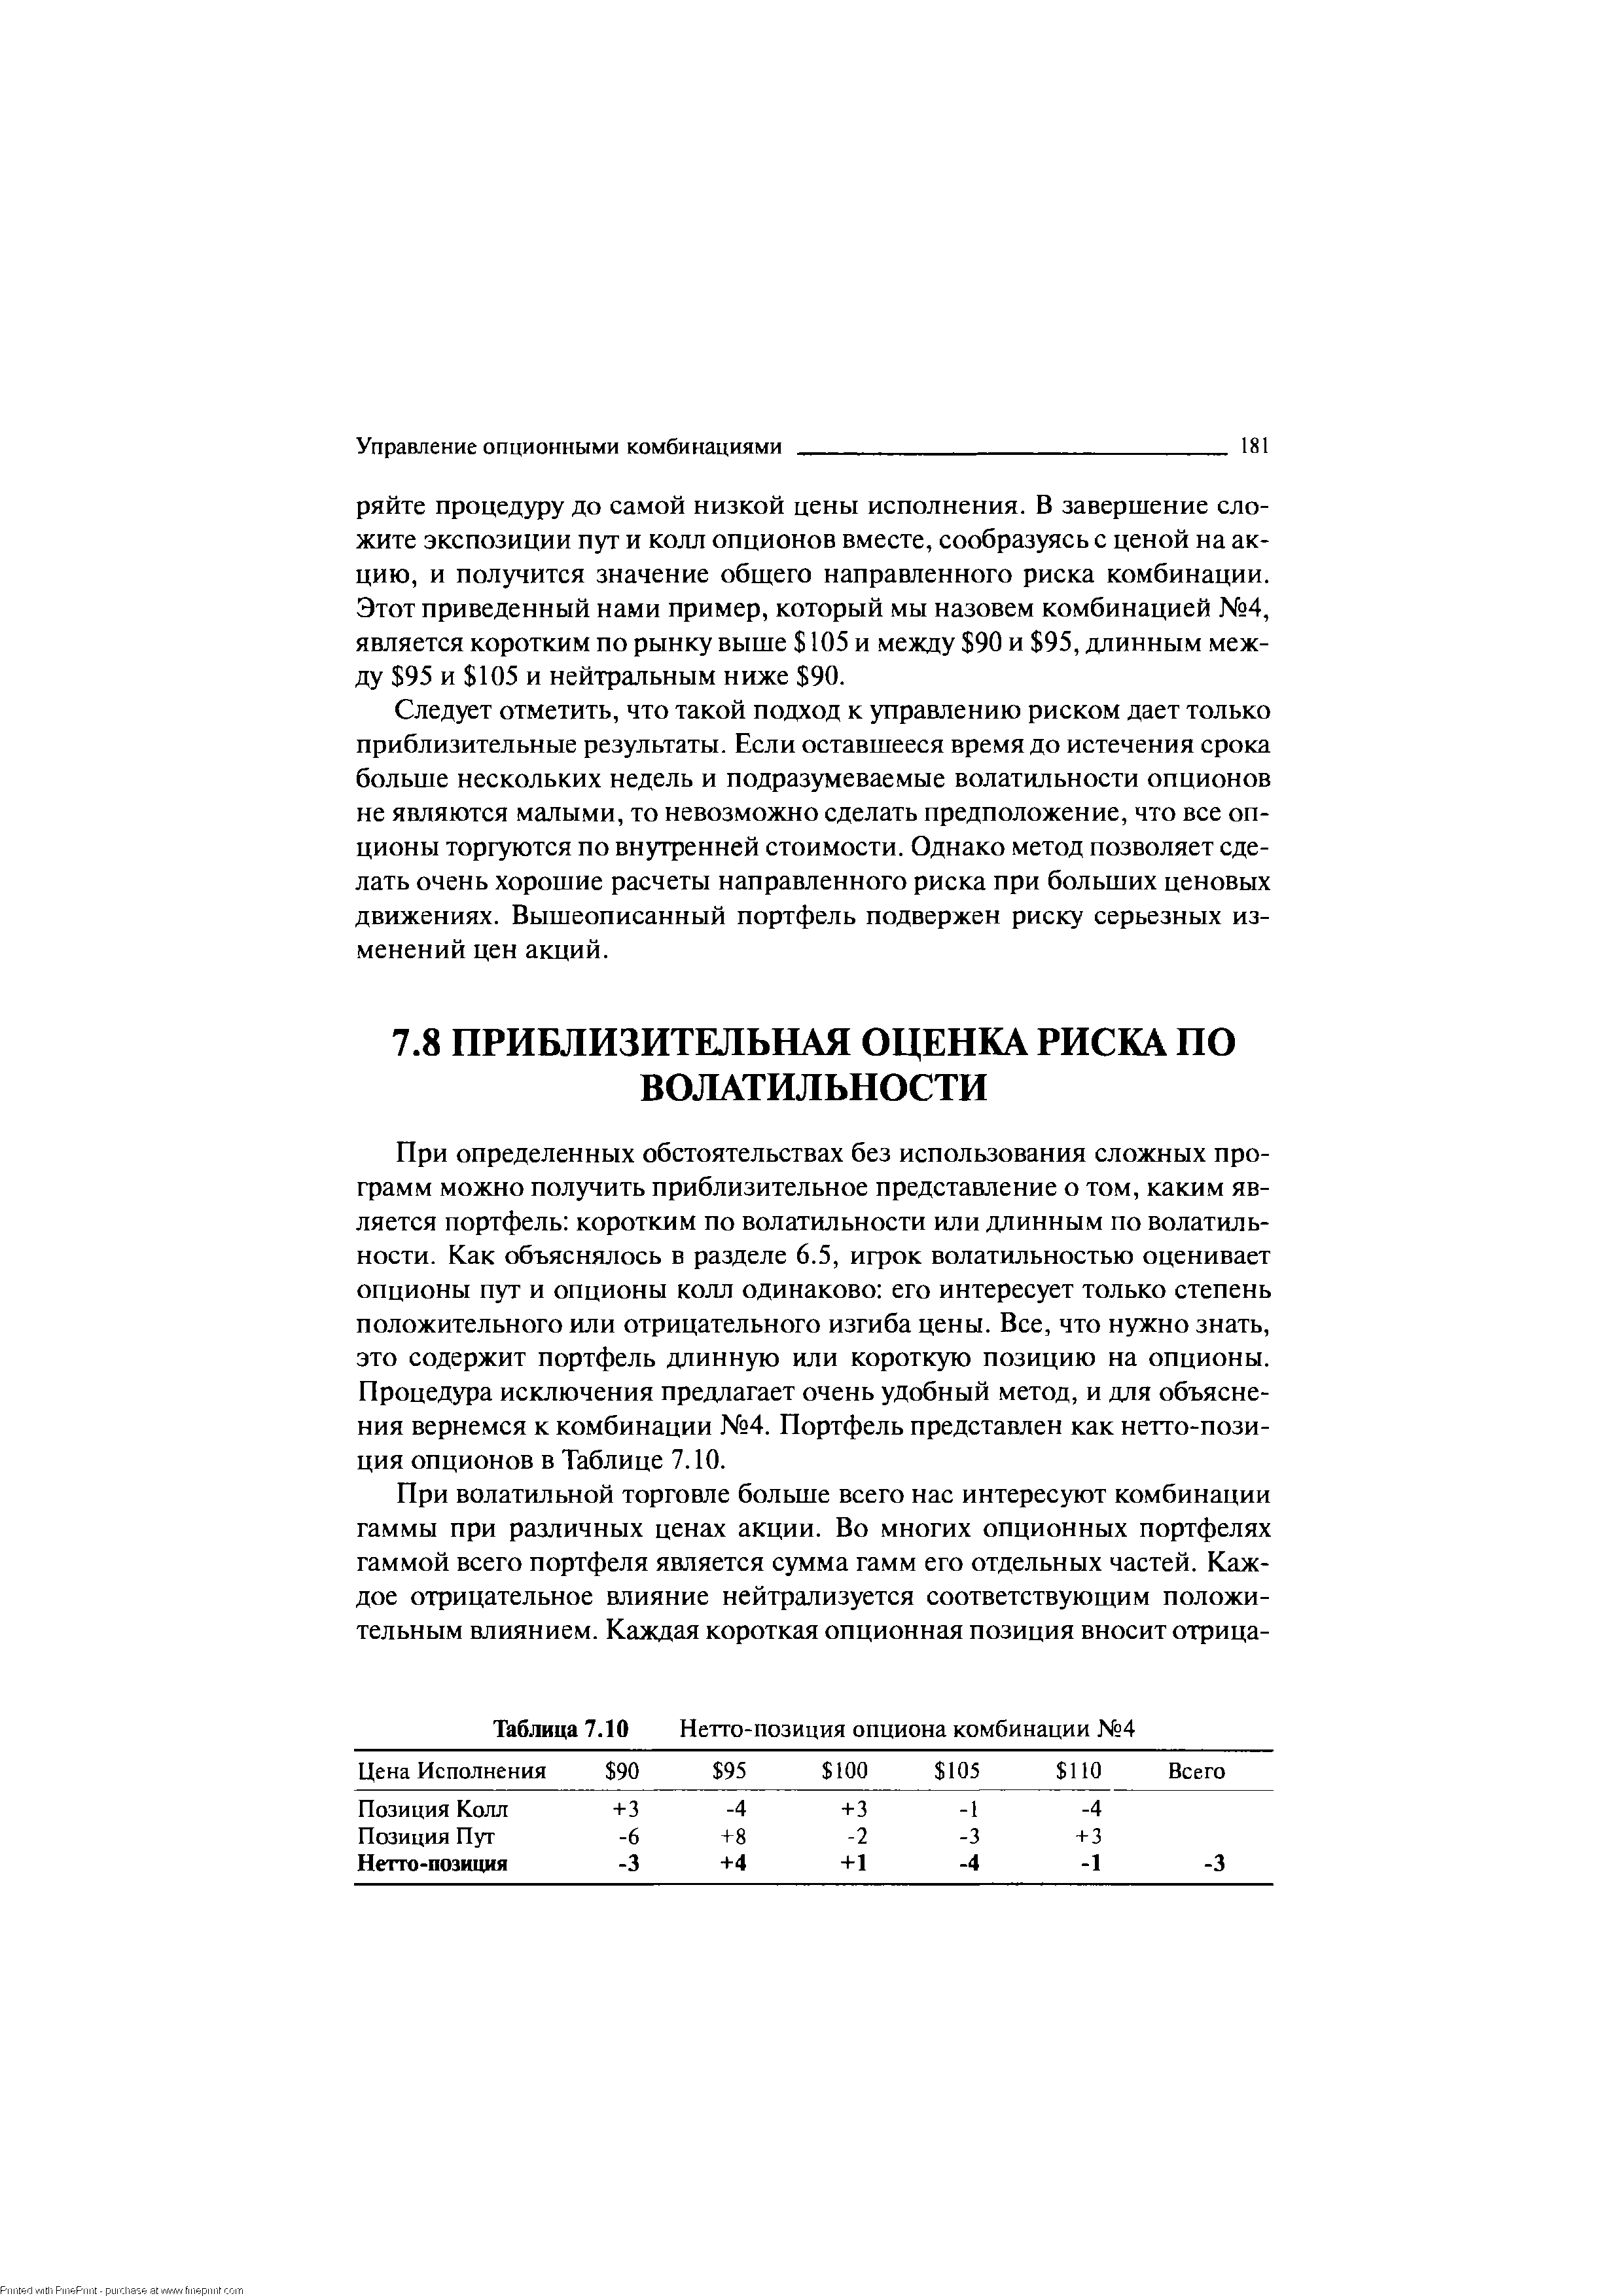 Таблица 7.10 Нетго-позиция опциона комбинации №4
